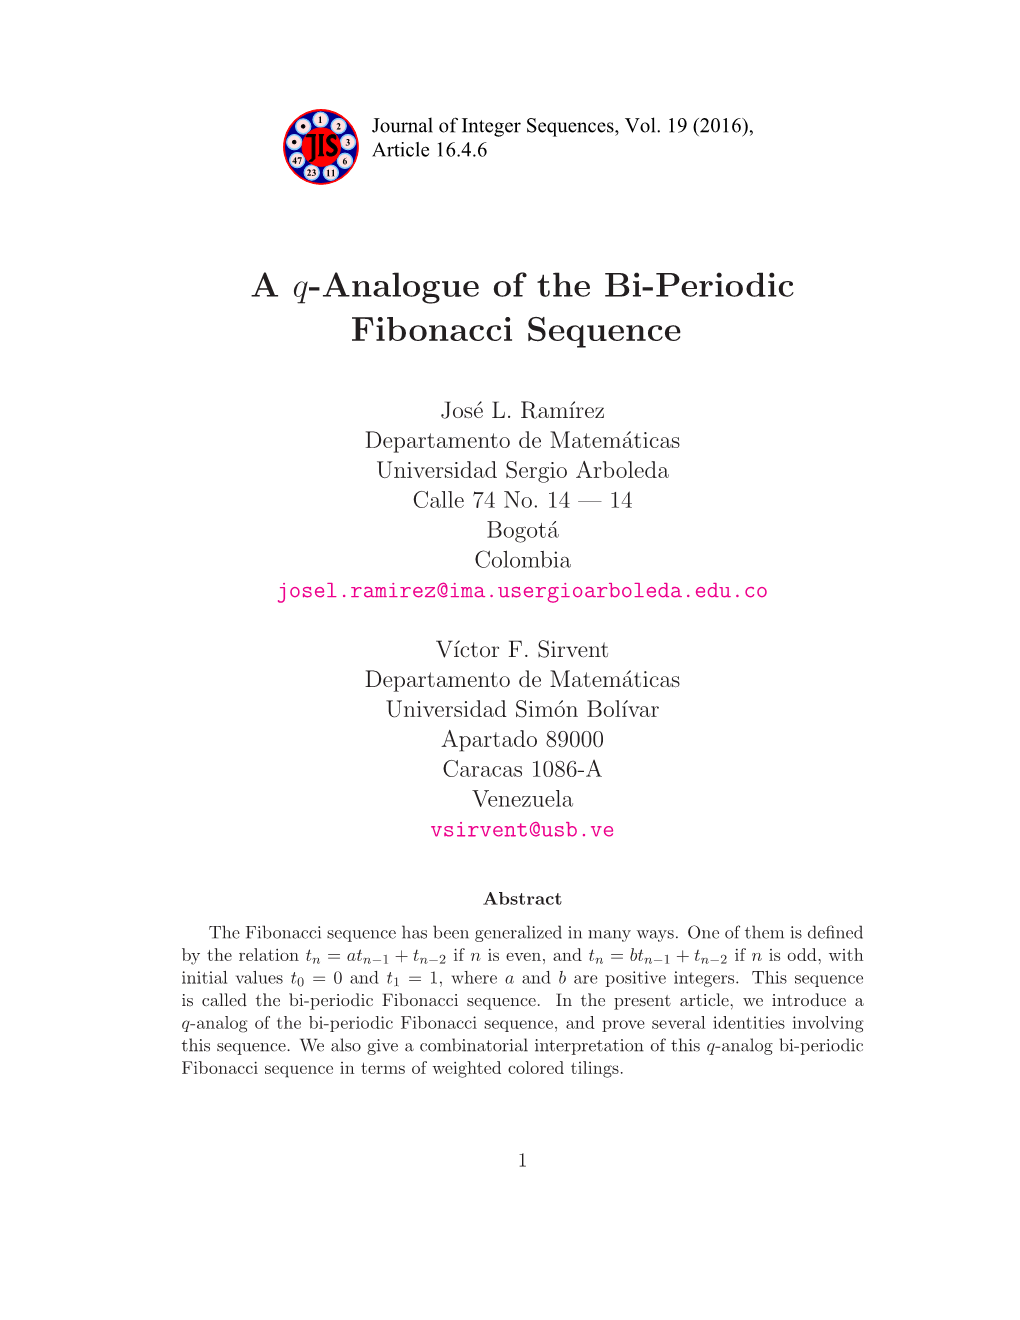 A Q-Analogue of the Bi-Periodic Fibonacci Sequence